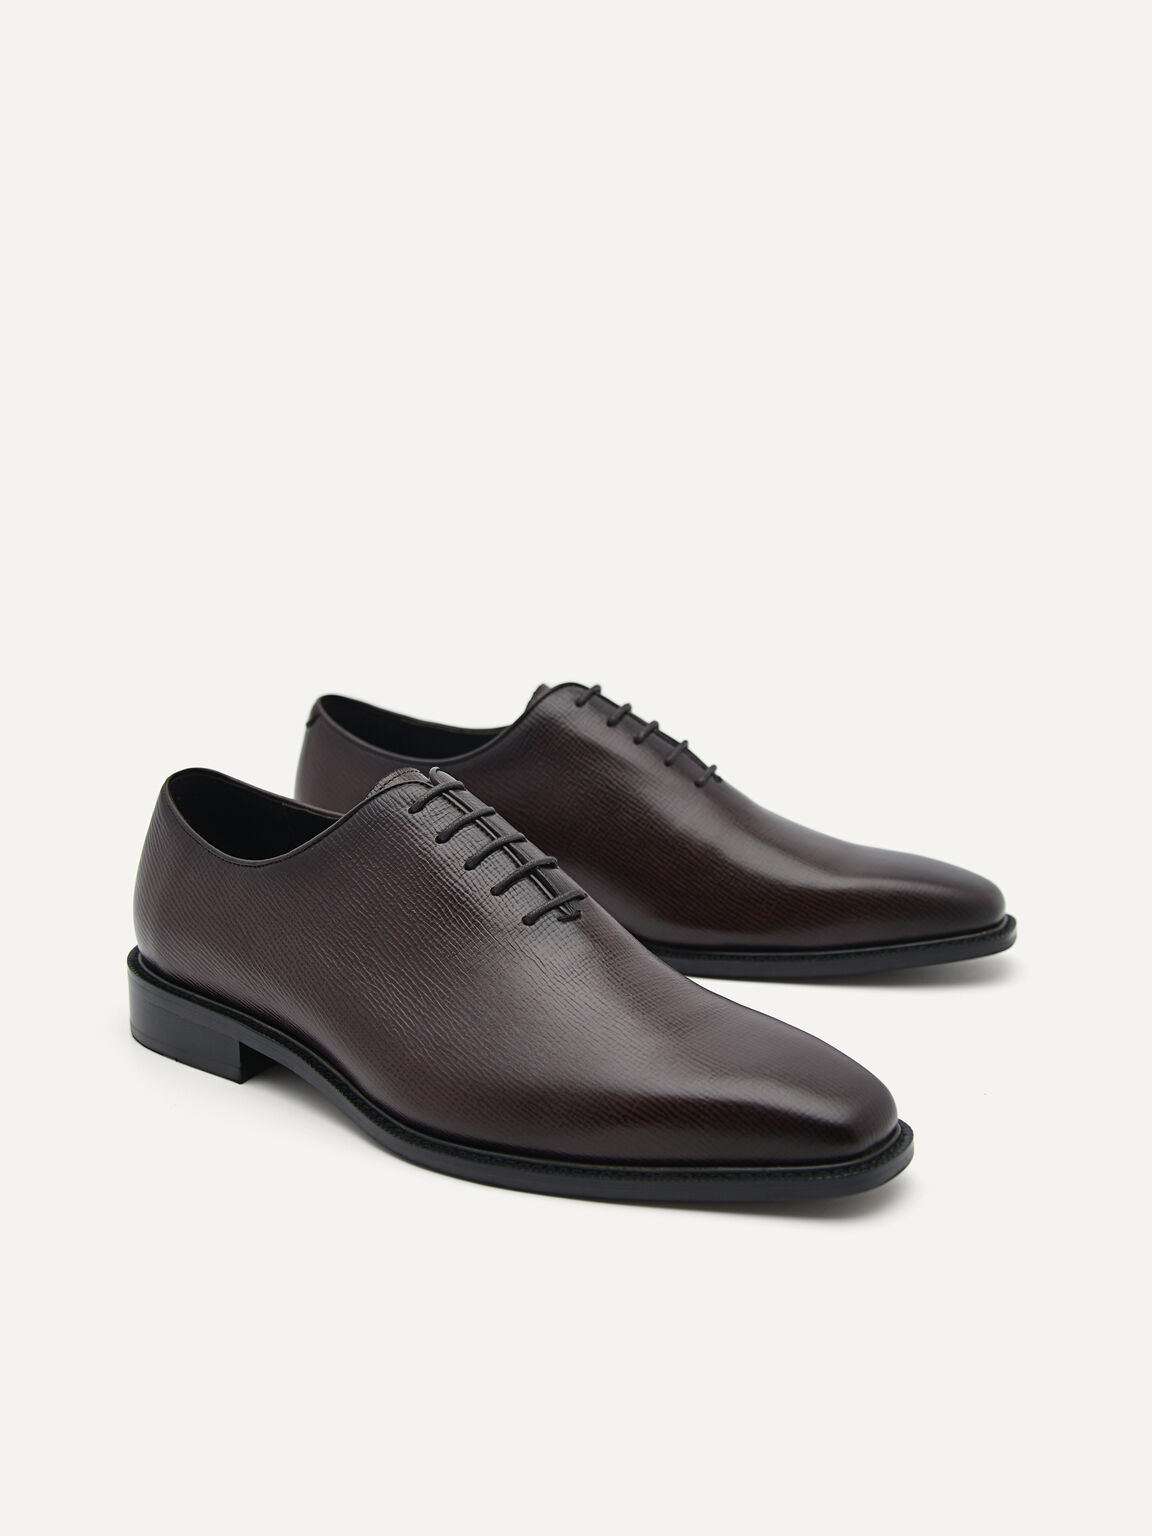 Brando Oxford Shoes, Dark Brown